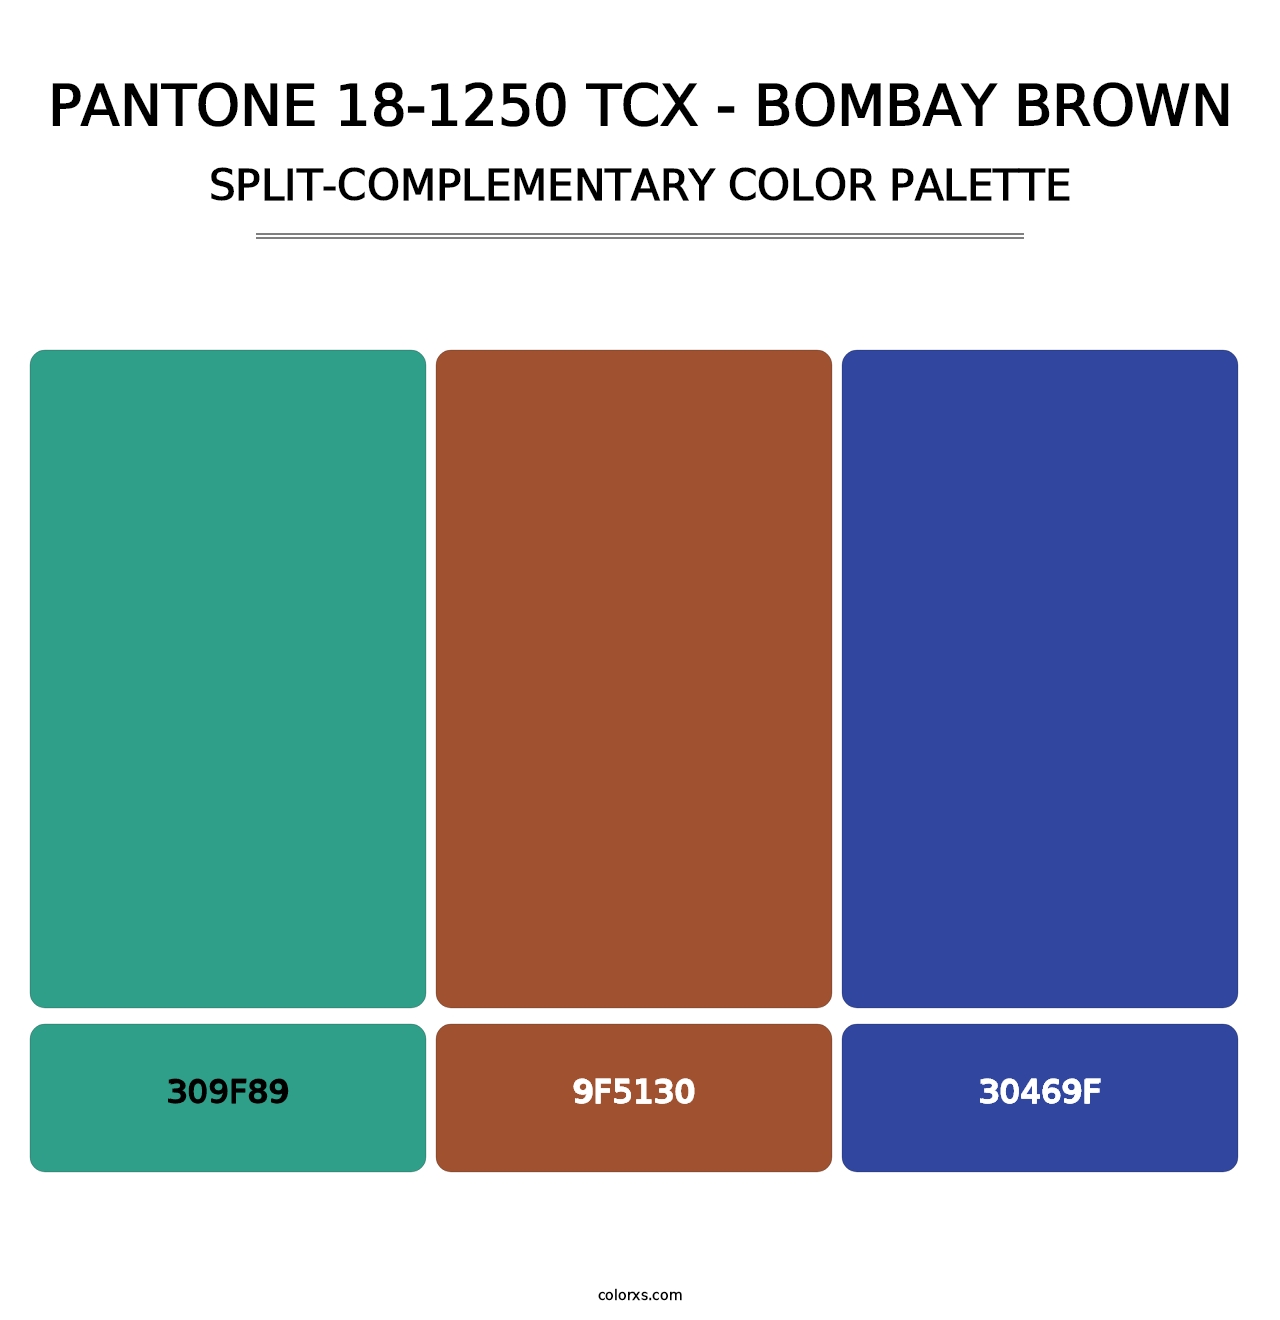 PANTONE 18-1250 TCX - Bombay Brown - Split-Complementary Color Palette